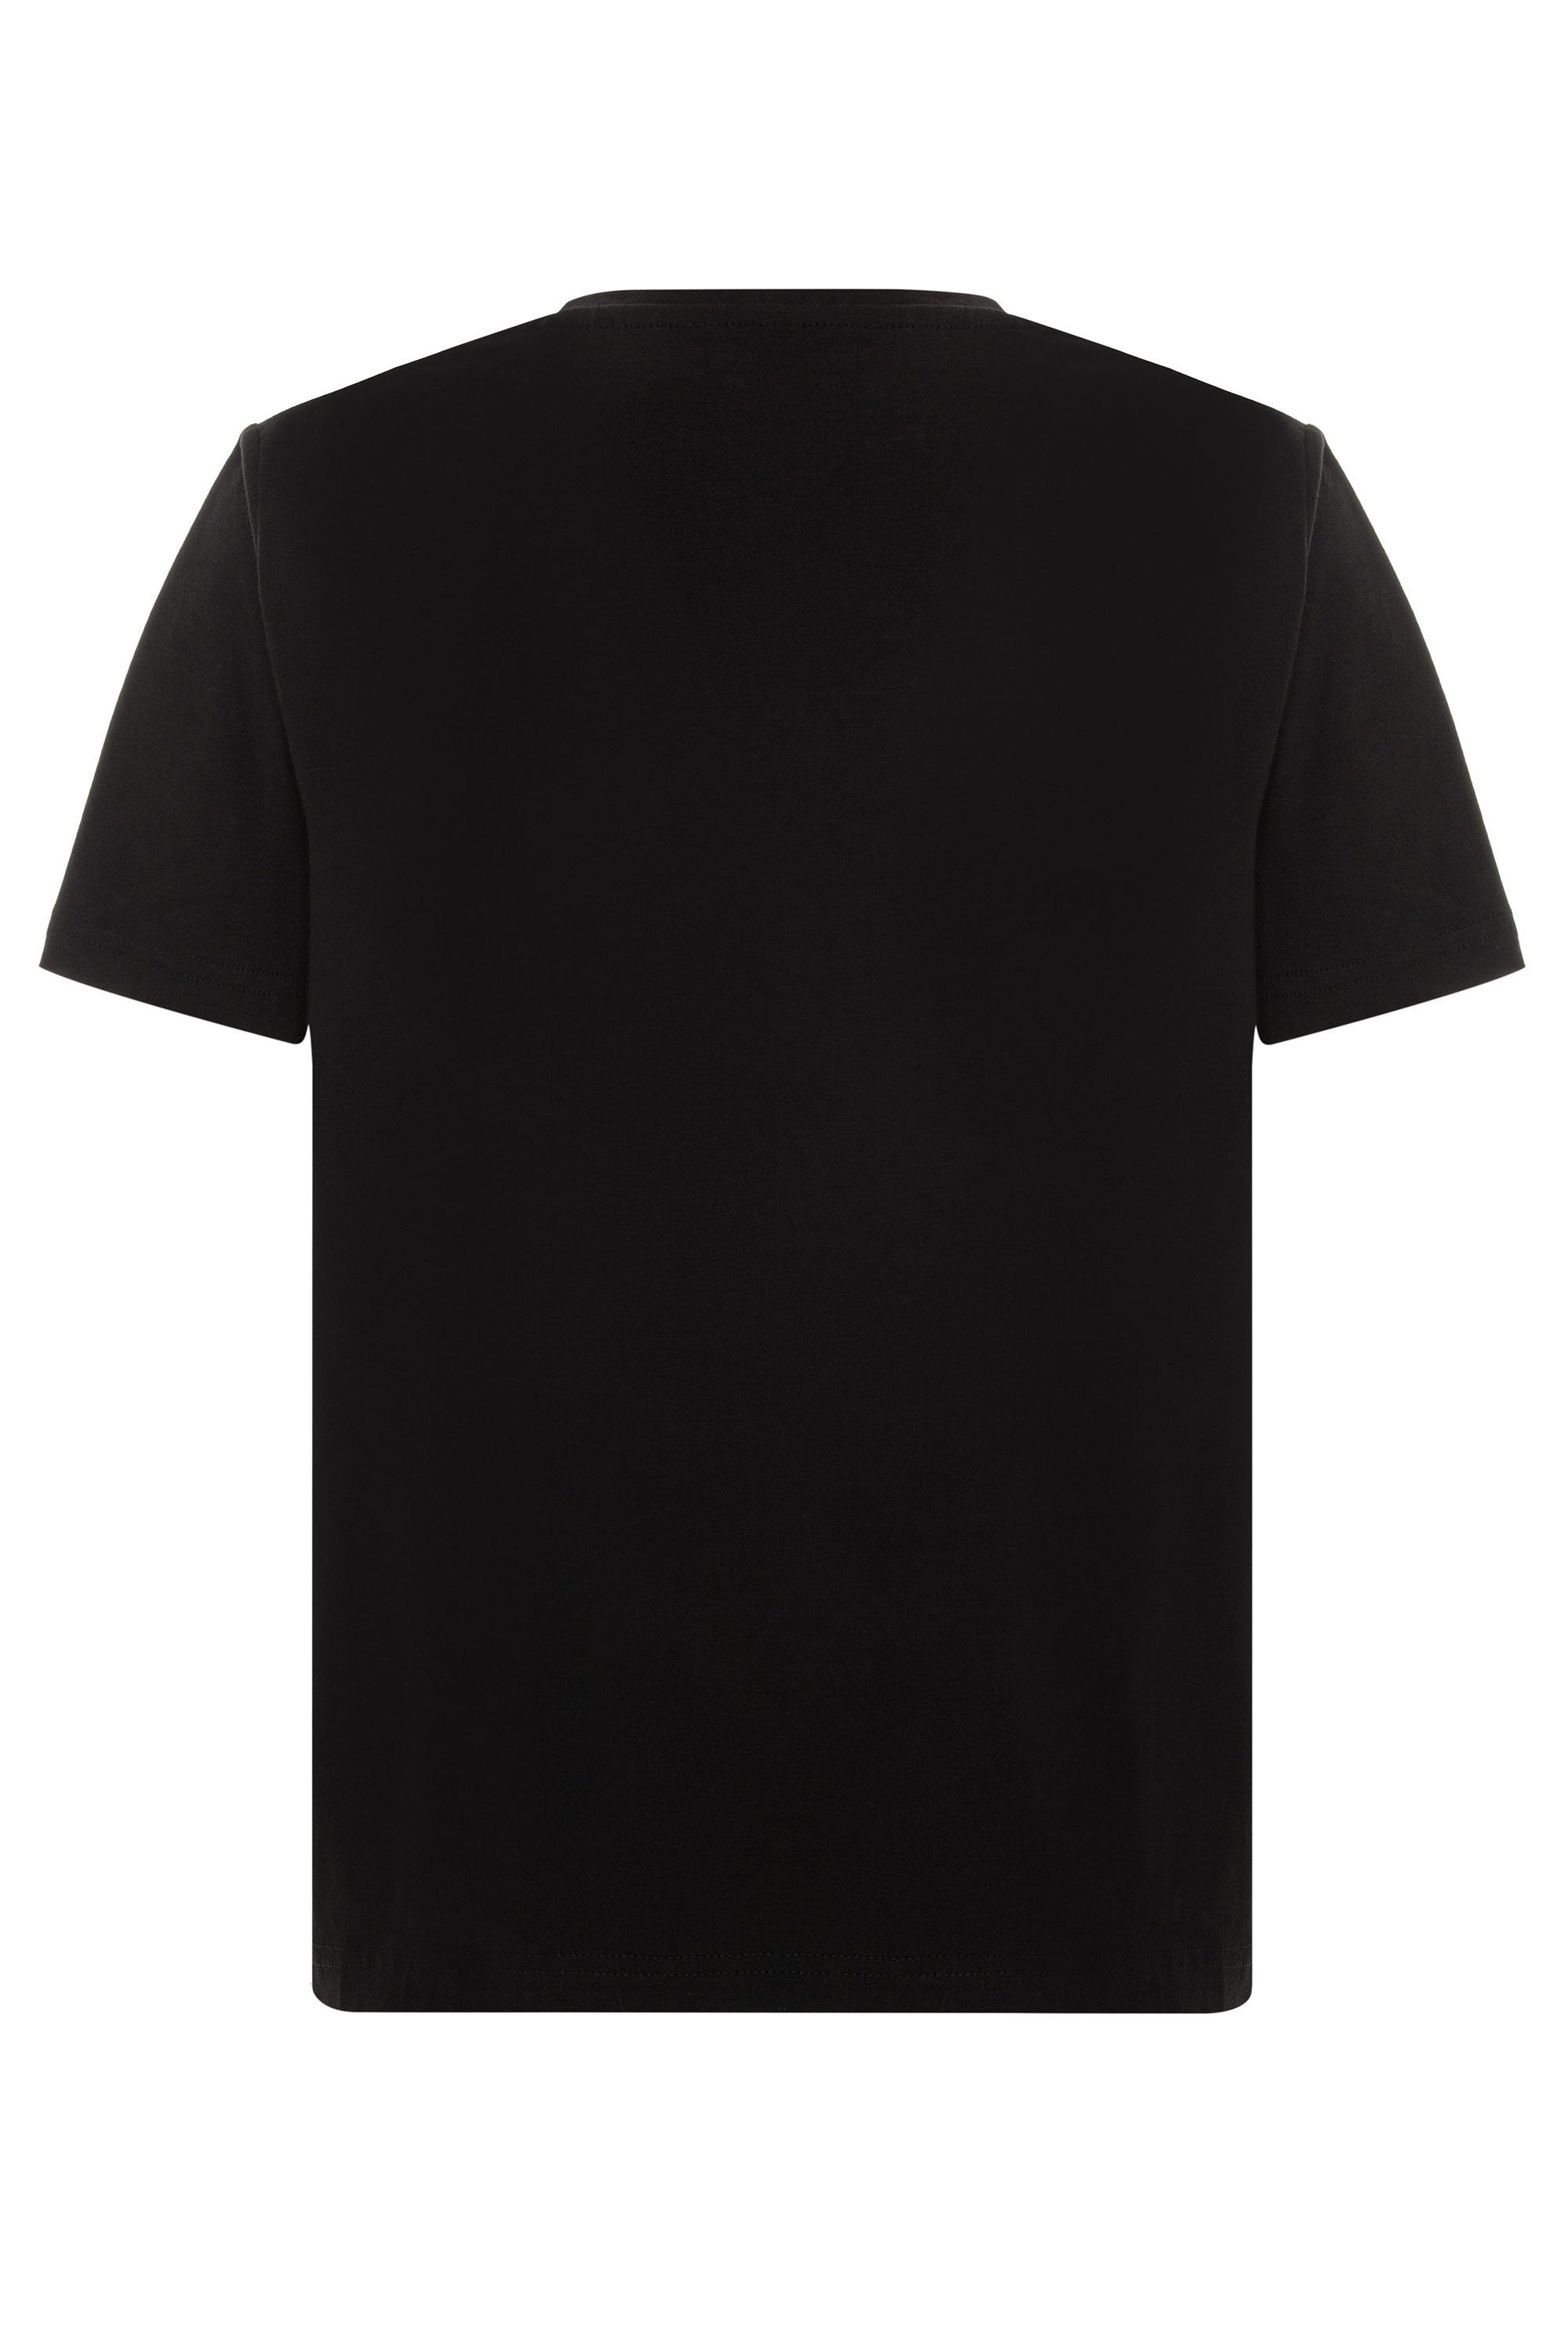 Cipo schwarz-weiß coolem mit T-Shirt & Print Baxx